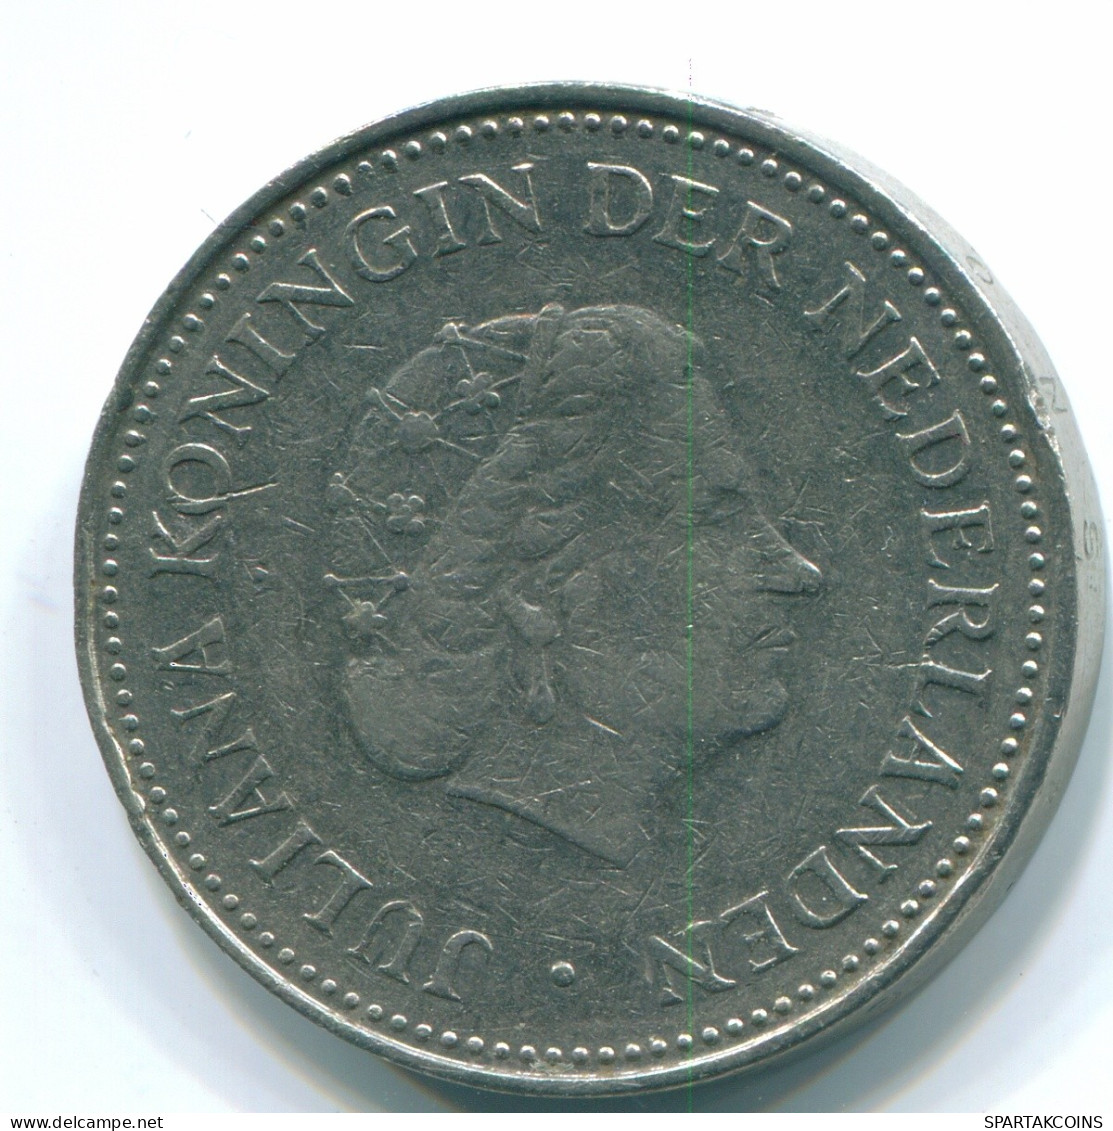 1 GULDEN 1971 NETHERLANDS ANTILLES Nickel Colonial Coin #S11976.U.A - Antilles Néerlandaises